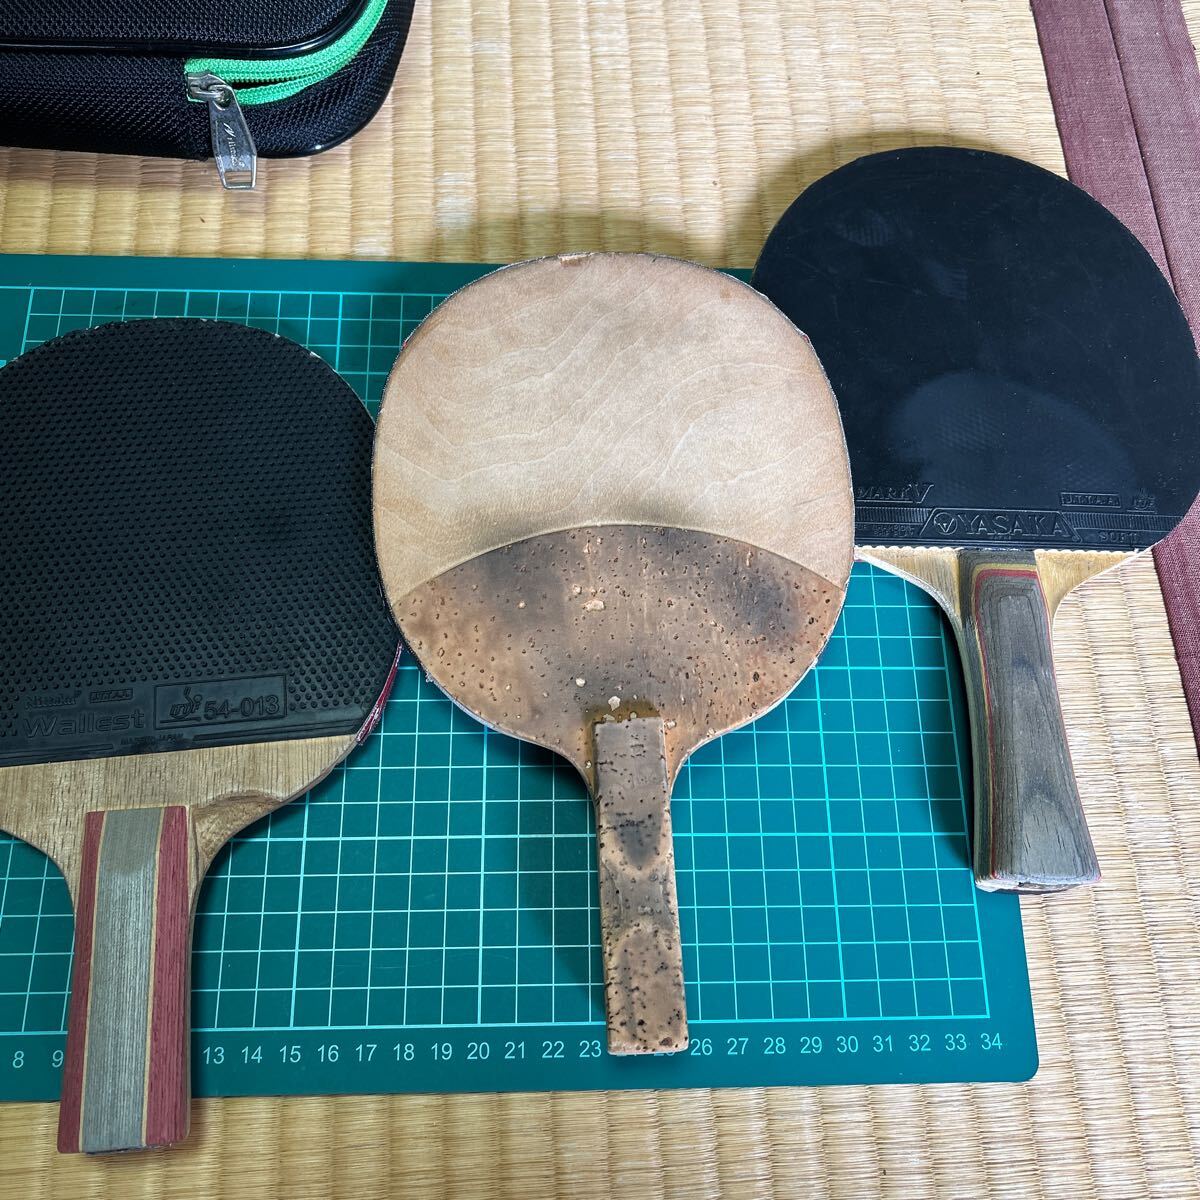  ping-pong racket butterfly nitakButterflytenaji-she-k hand pen China type VICTAS